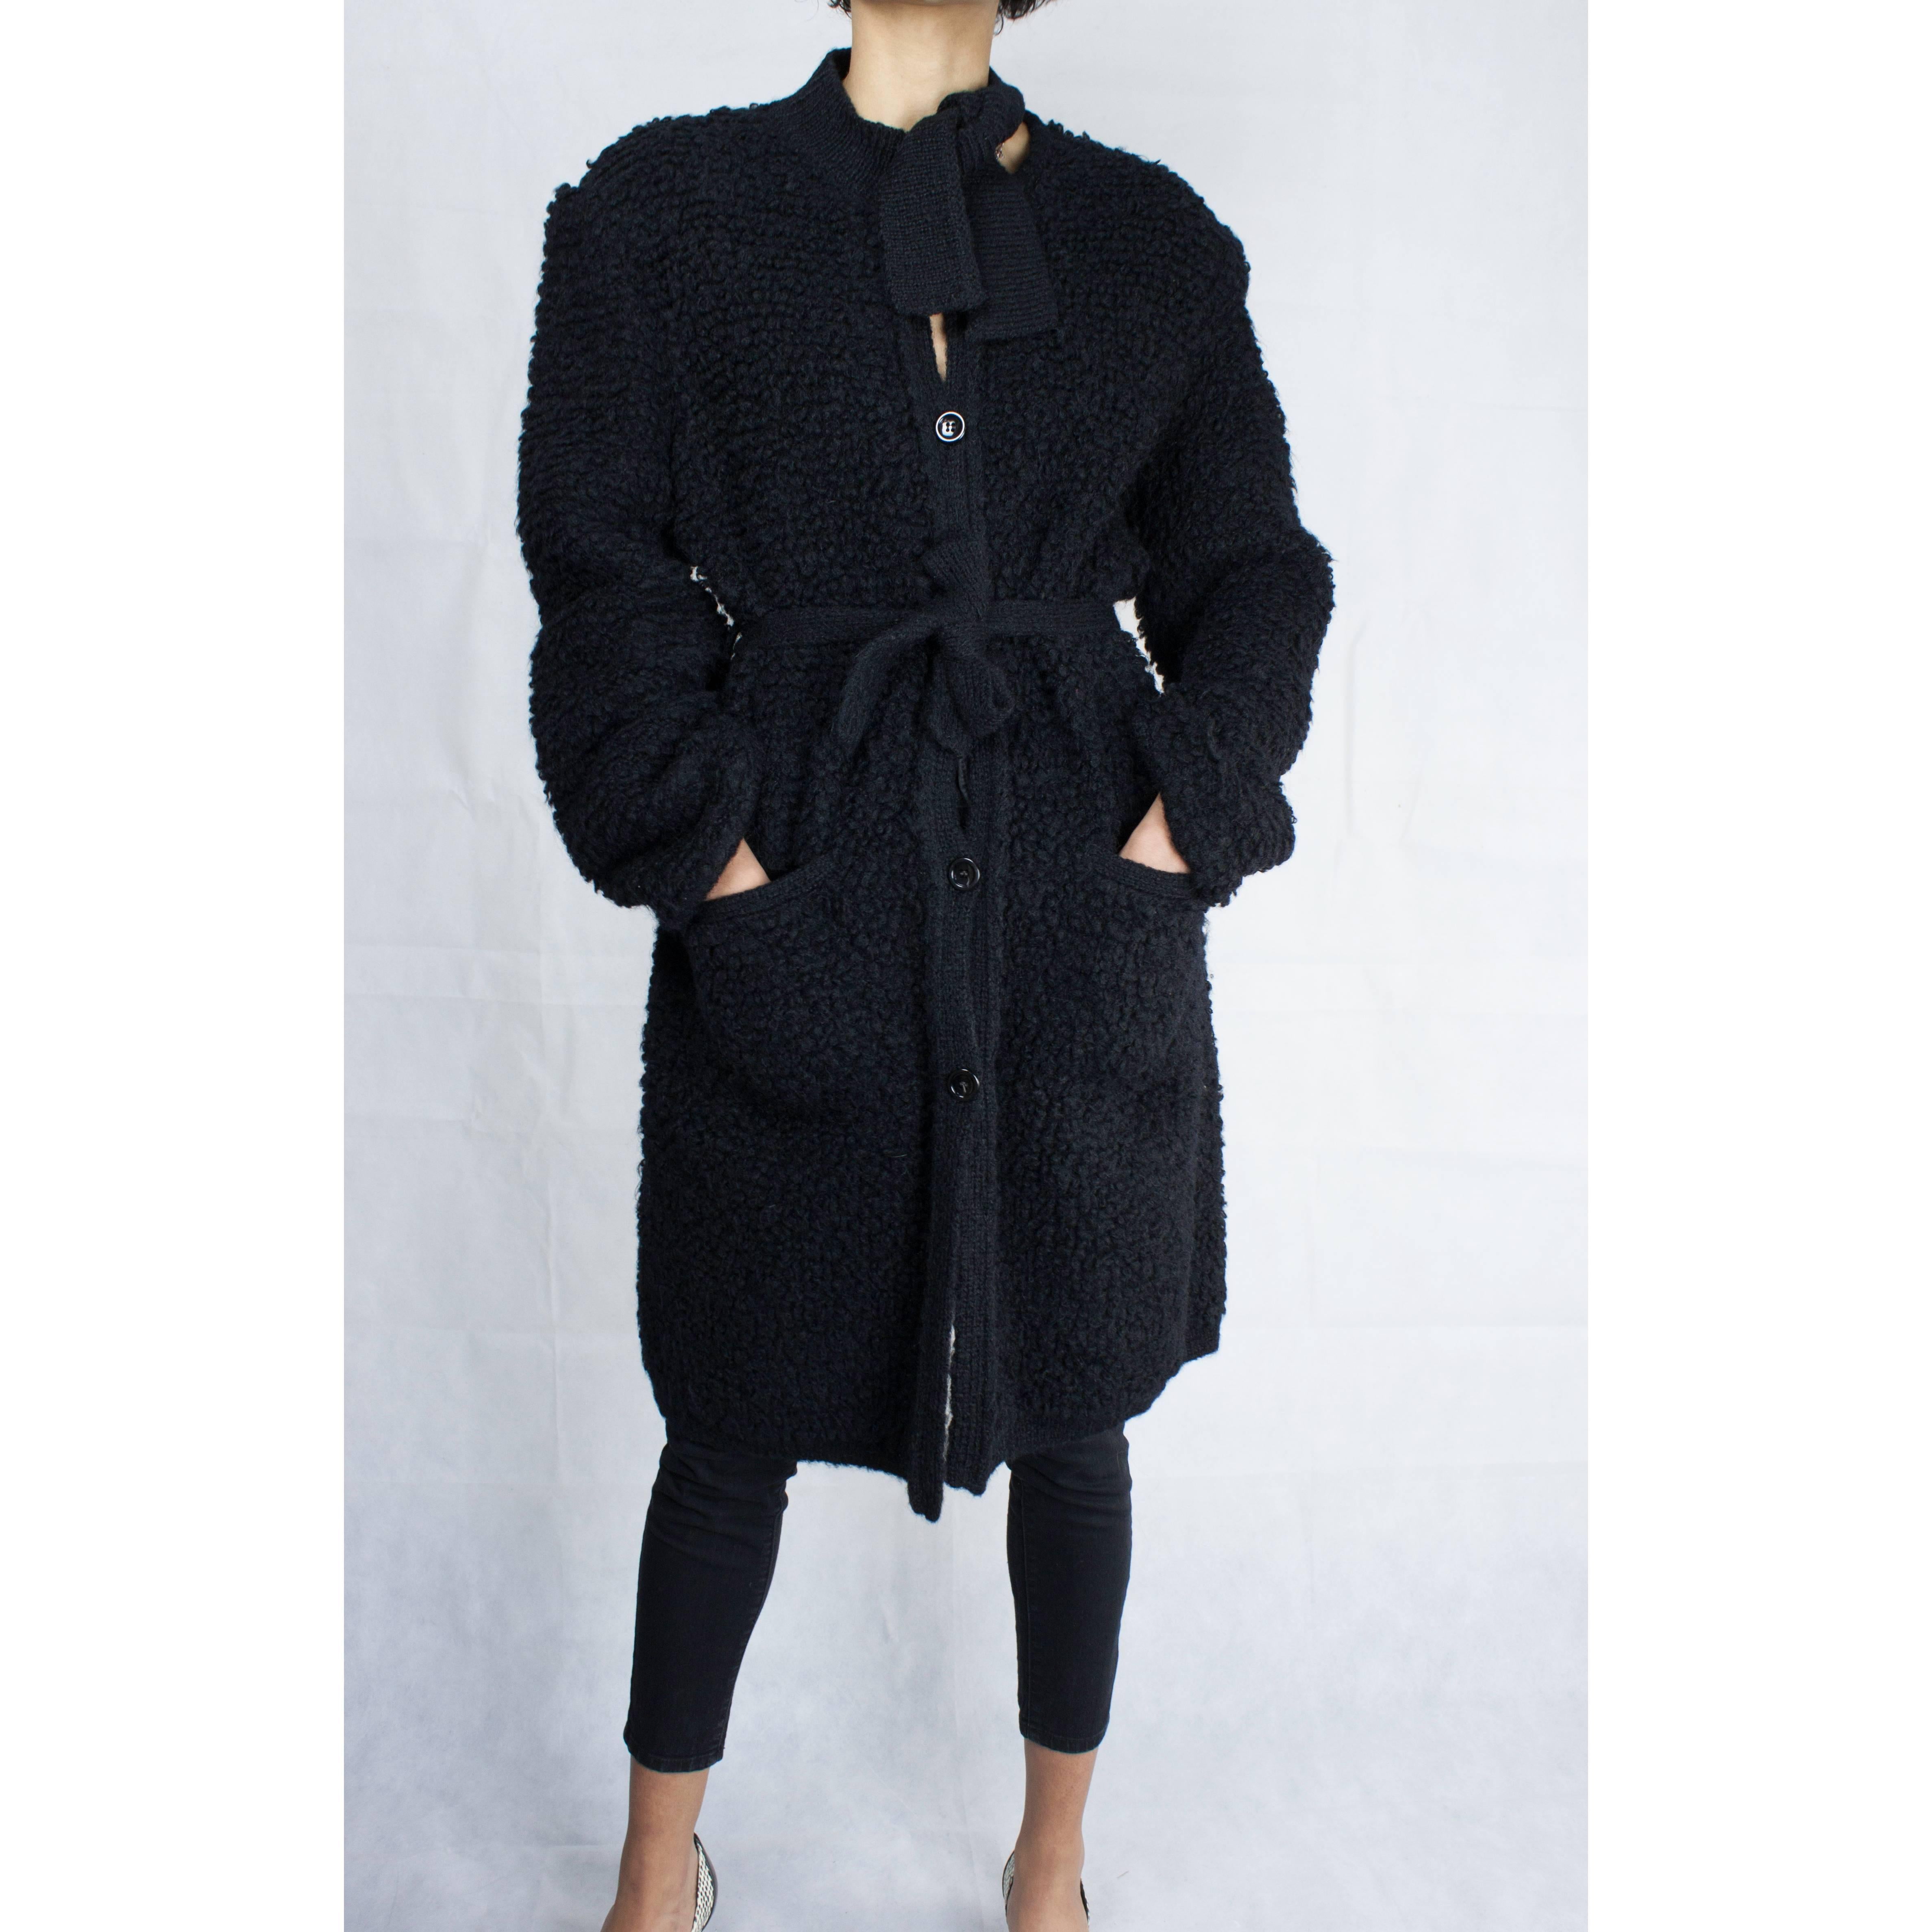 Important Sonia Rykiel knitted black wool coat, circa 1960s 1